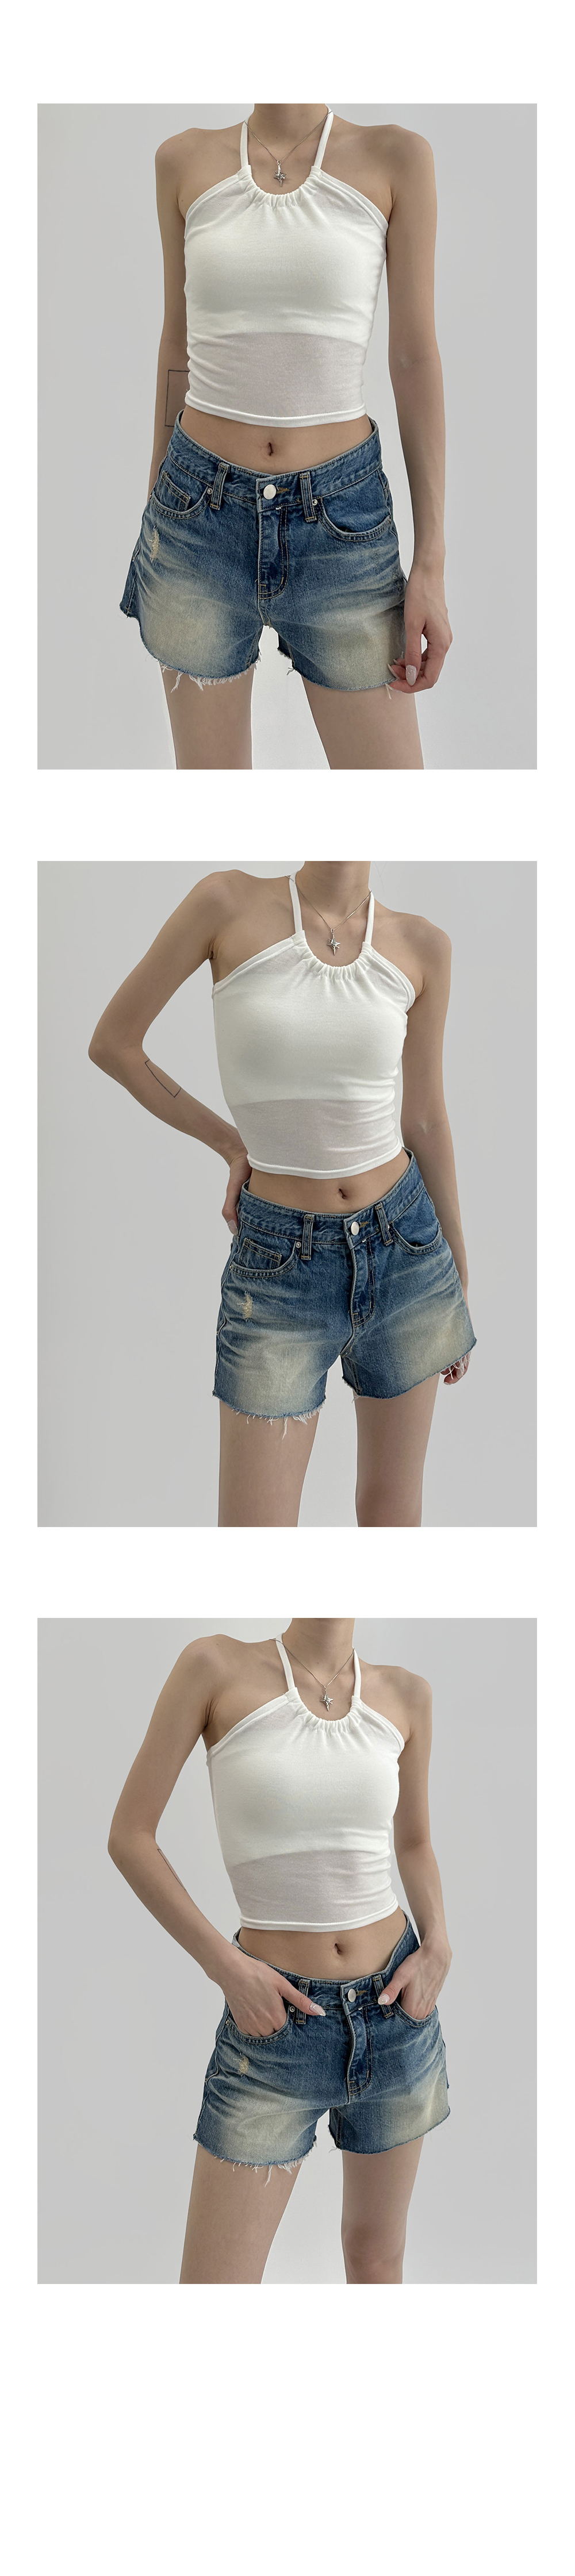 suspenders skirt/pants white color image-S1L5